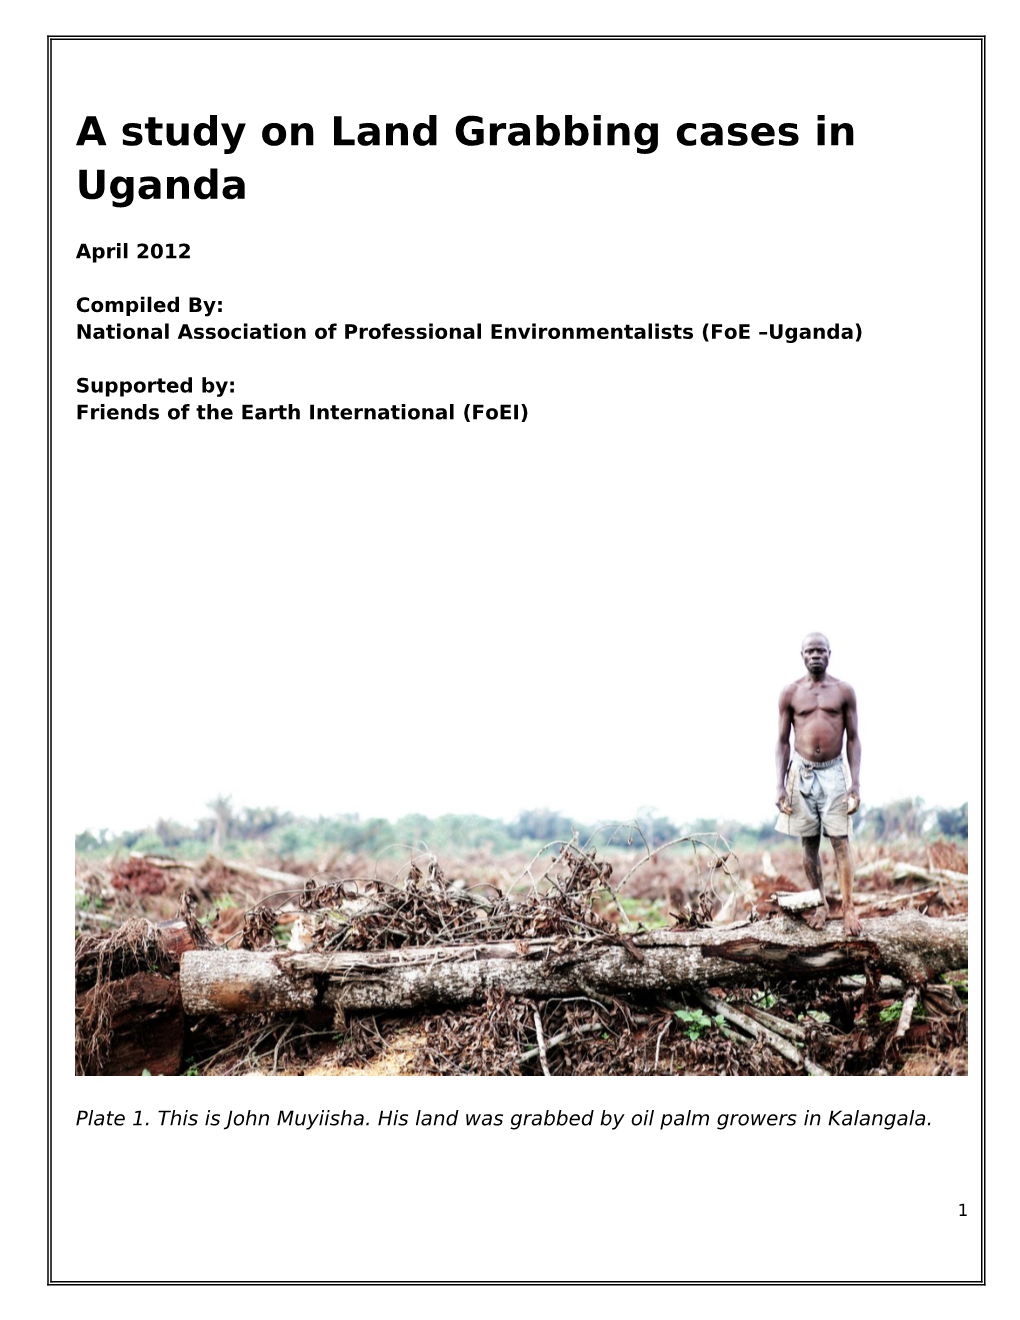 A Study on Land Grabbing Cases in Uganda